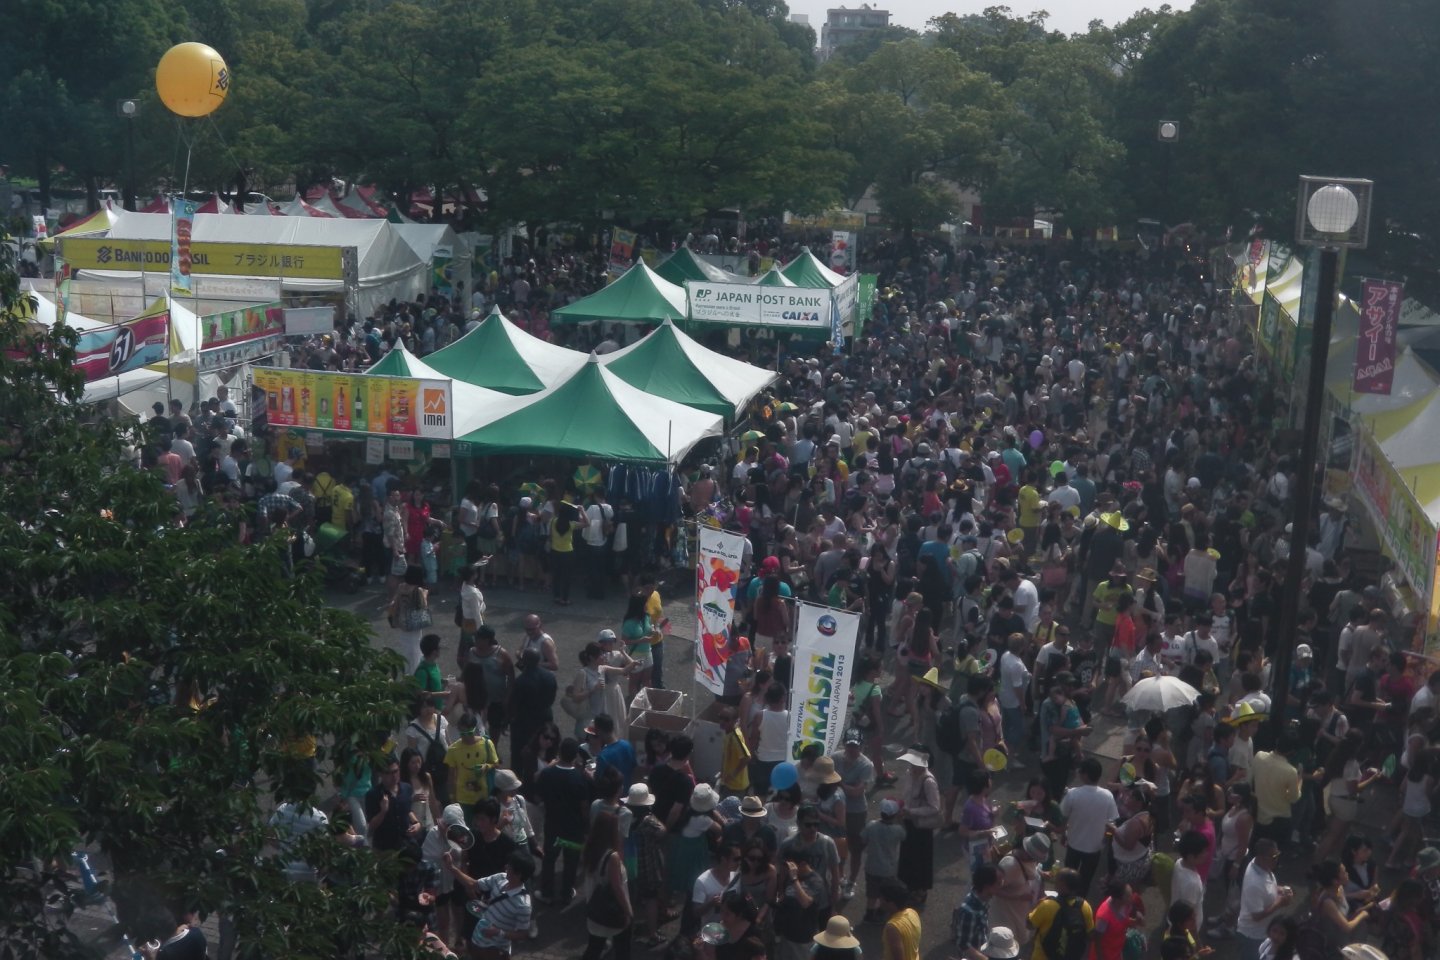 Brazil Festival 2024 - July Events in Tokyo - Japan Travel